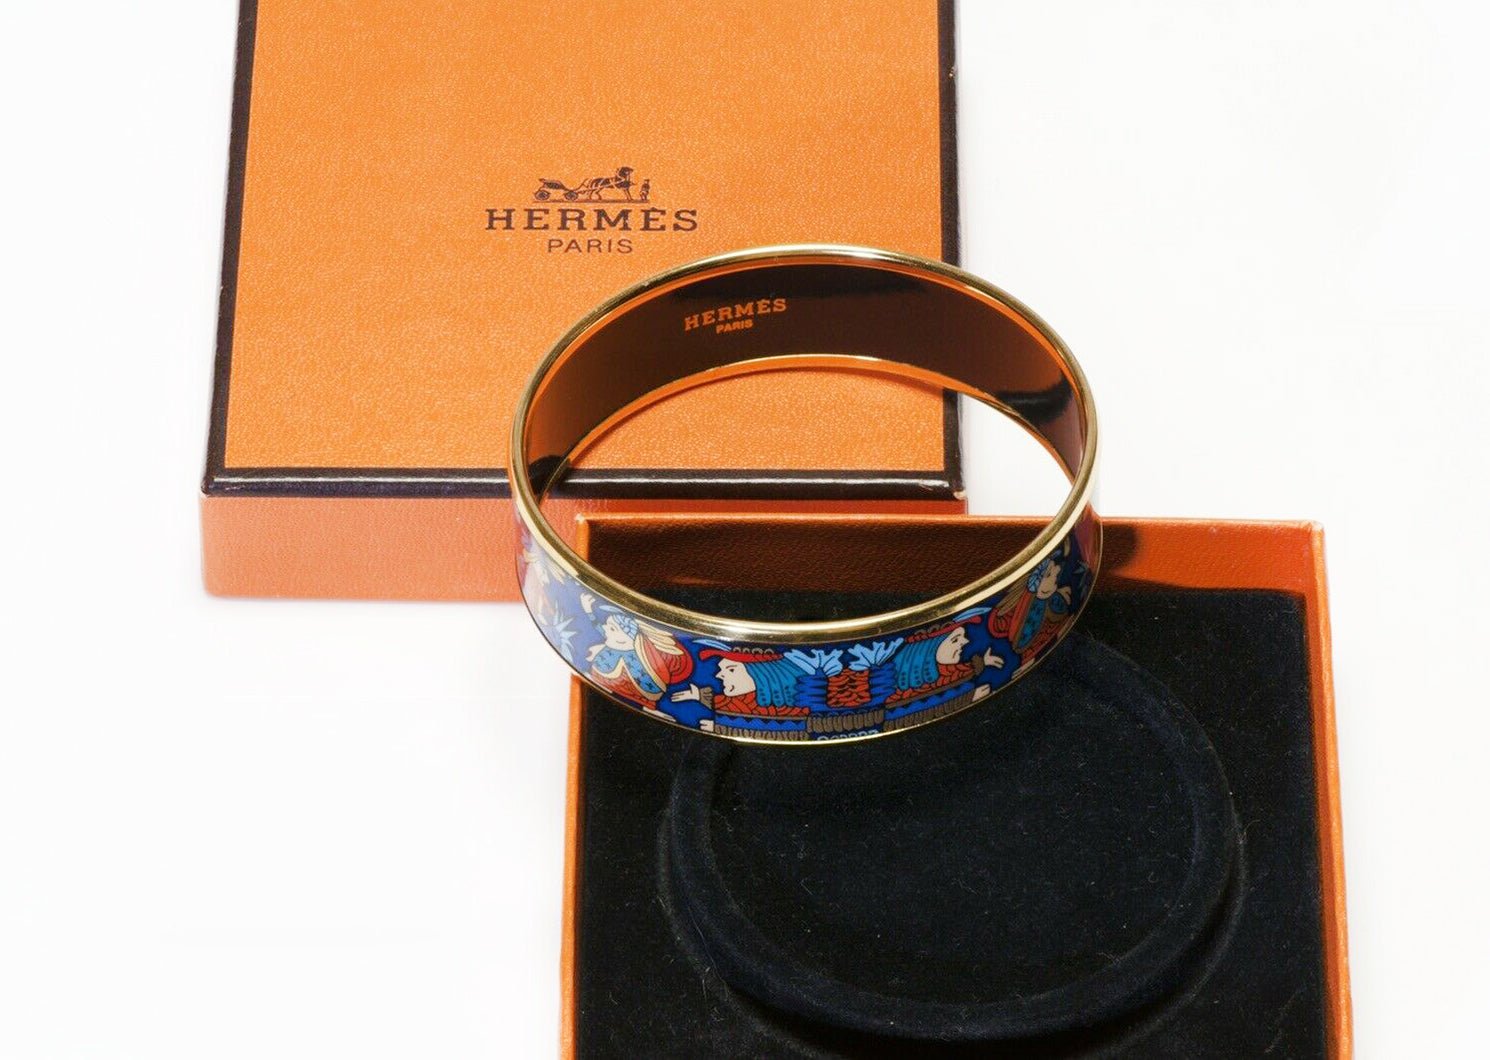 HERMES Wide Blue Enamel American Indian Pattern Bangle Bracelet